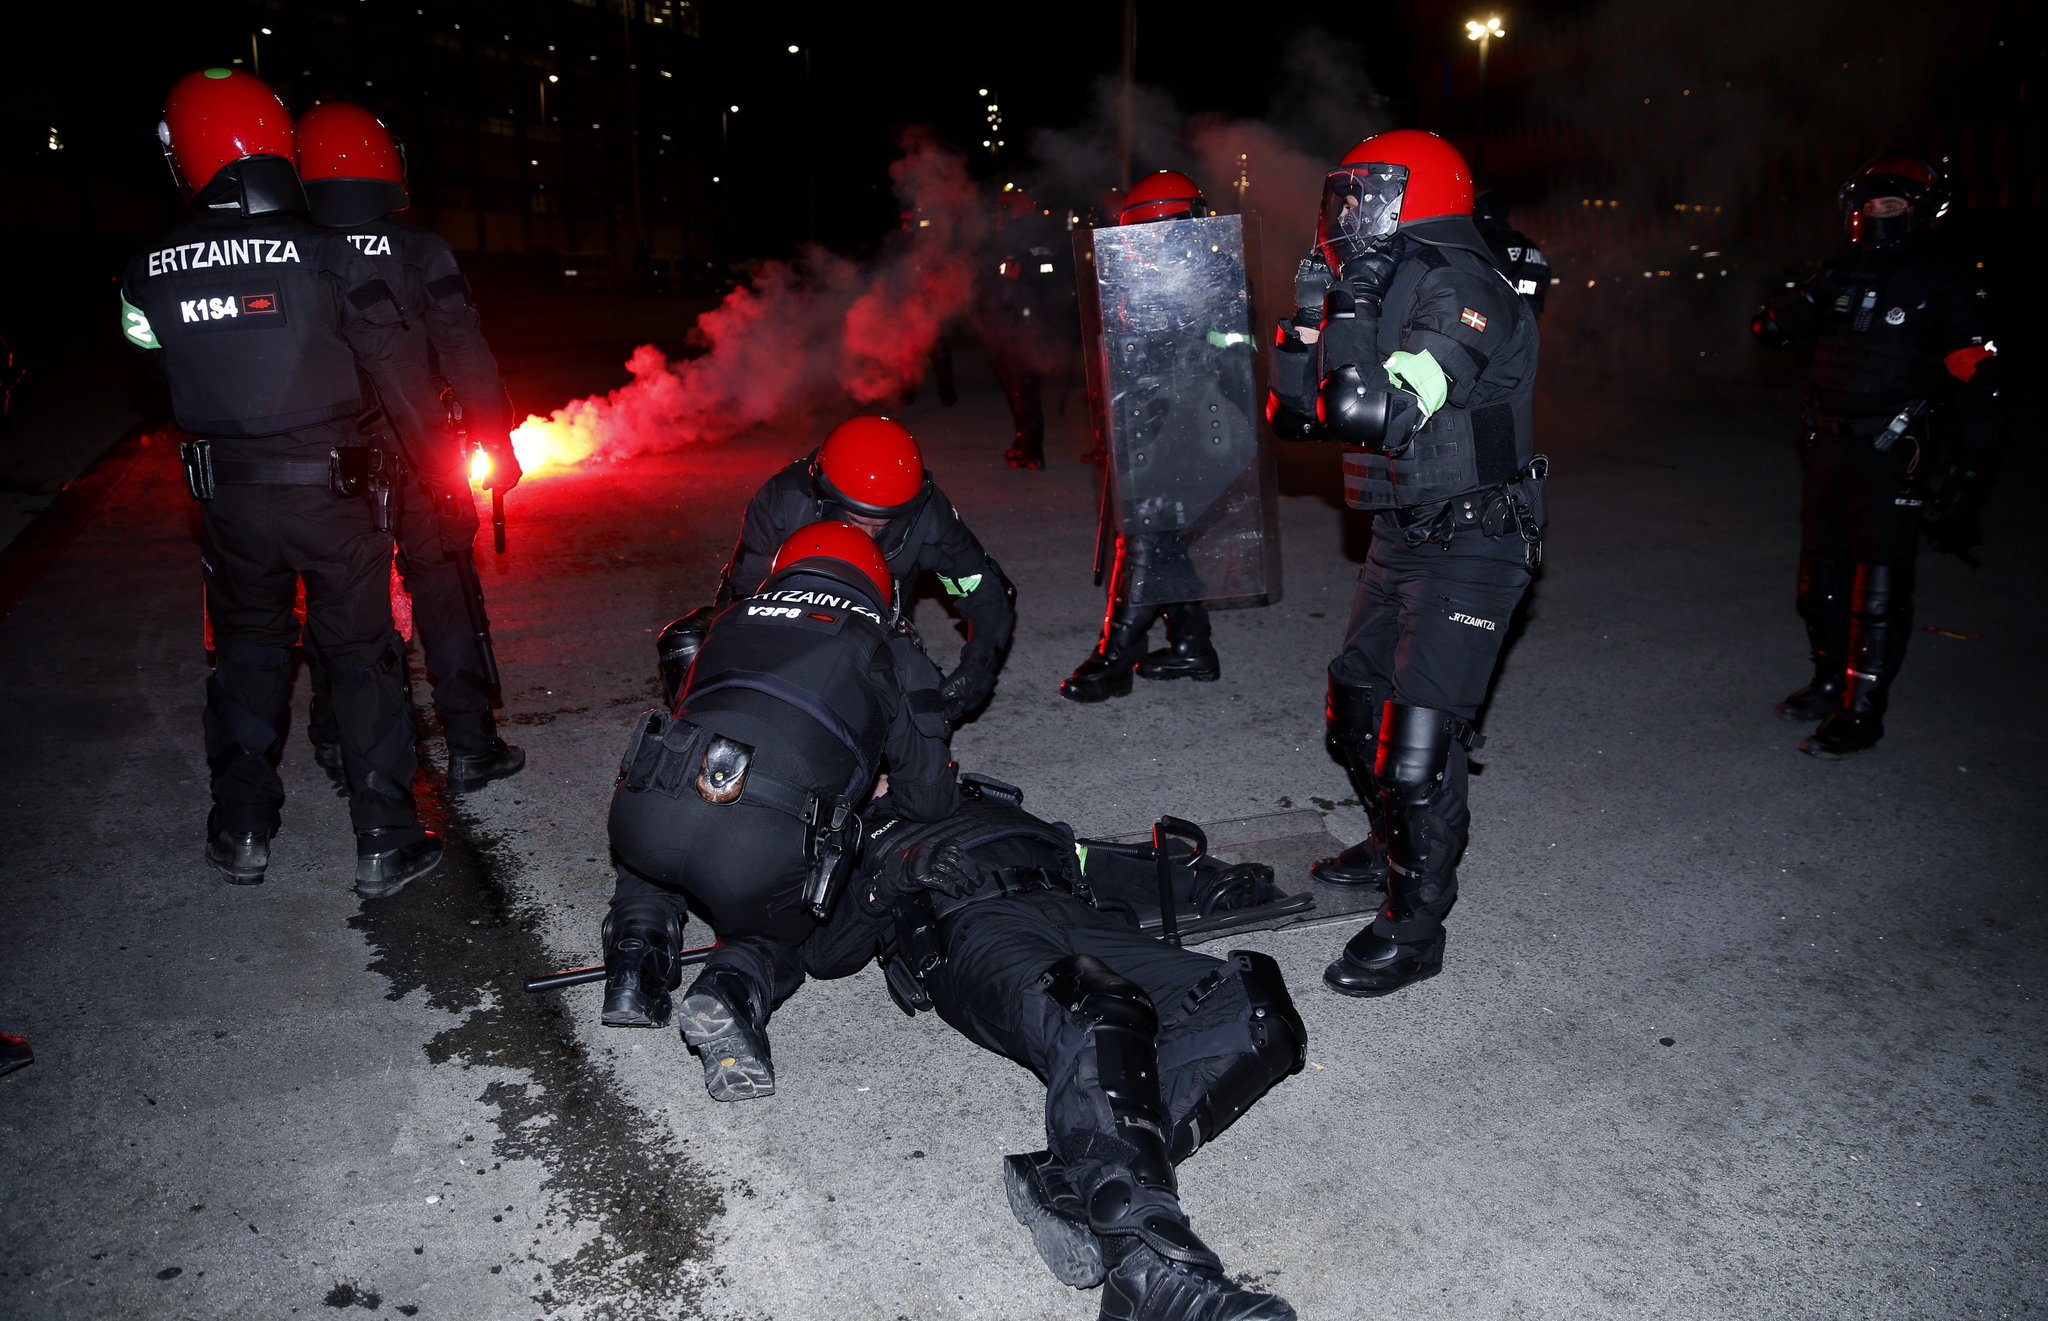 خشونت در فوتبال - سن مامس - پلیس - اتلتیک بیلبائو - اسپارتاک مسکو - لیگ اروپا